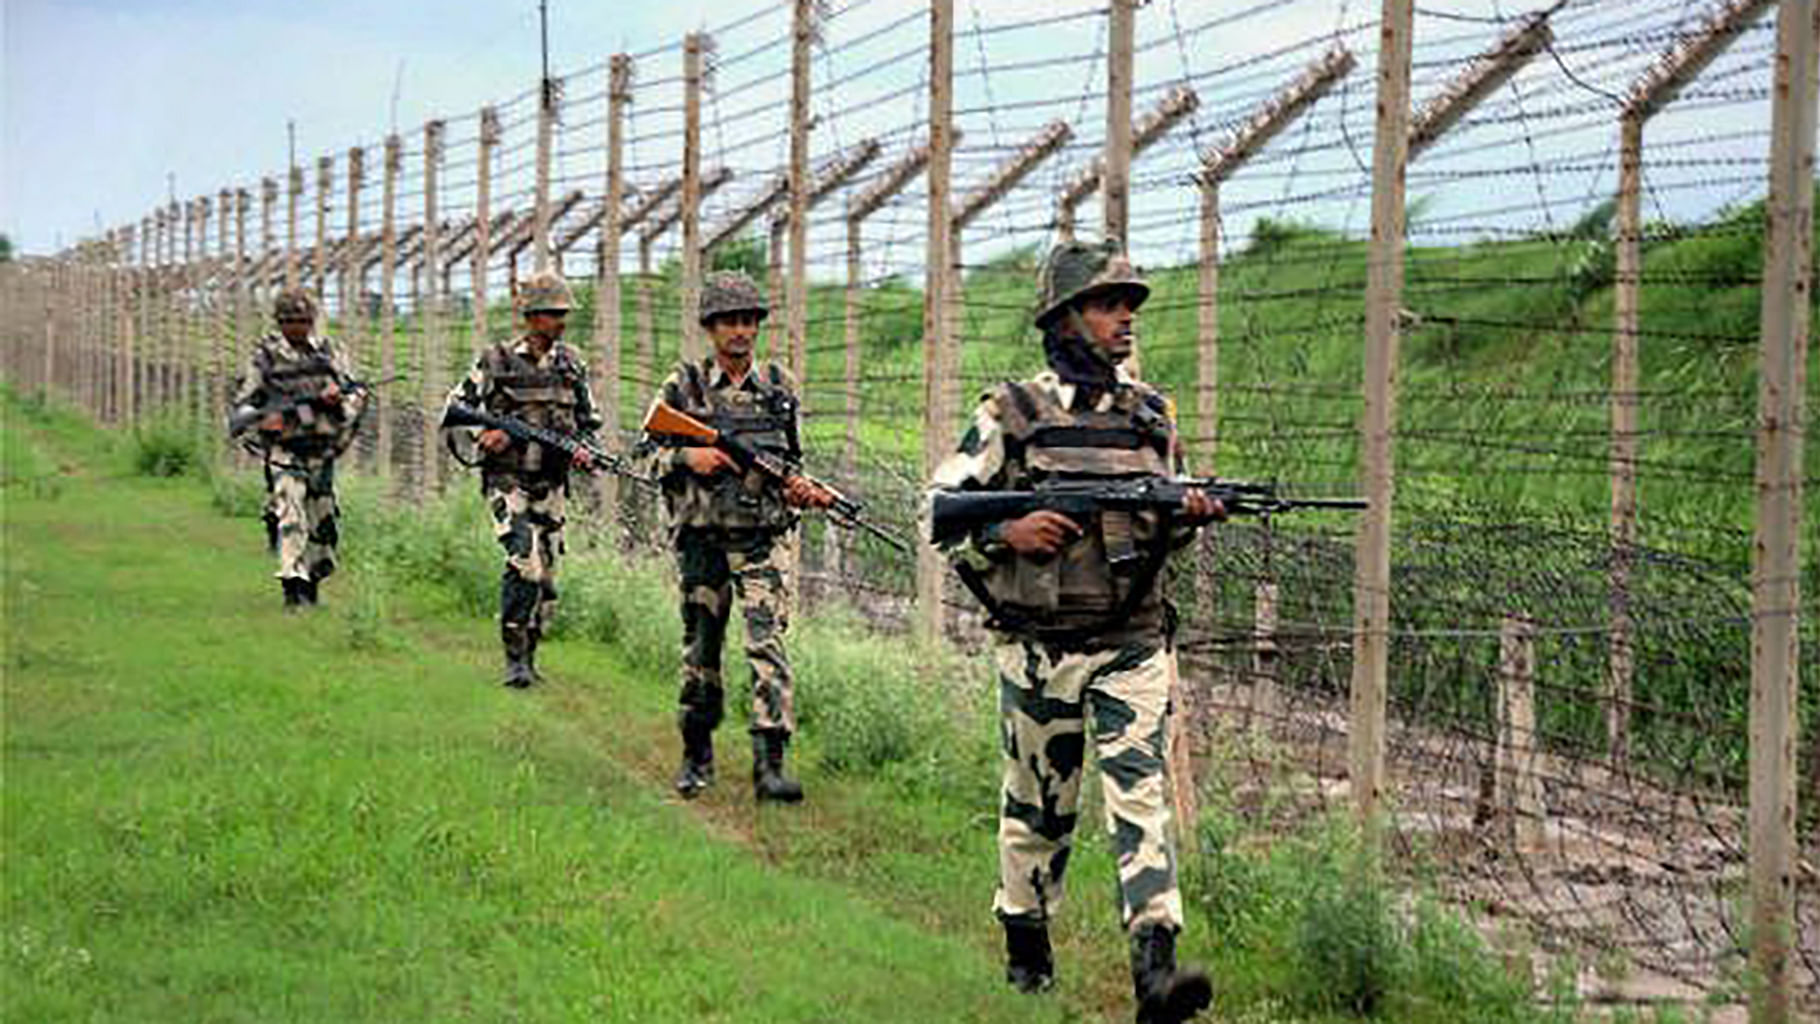 The BSF jawans patrol the India-Pakistan border. Image used for representational purpose.